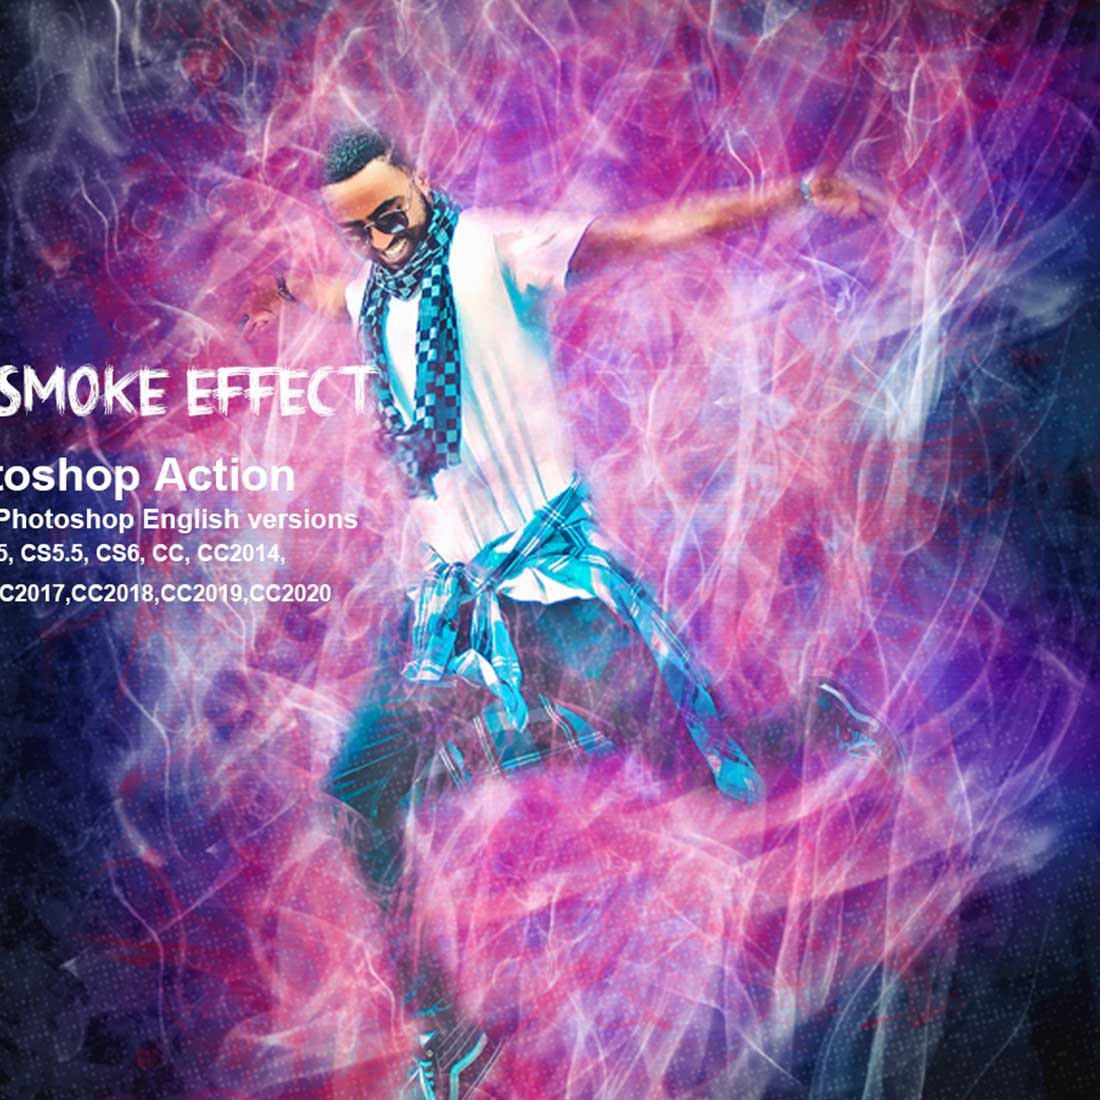 Smoke Photoshop Action Bundle preview image.